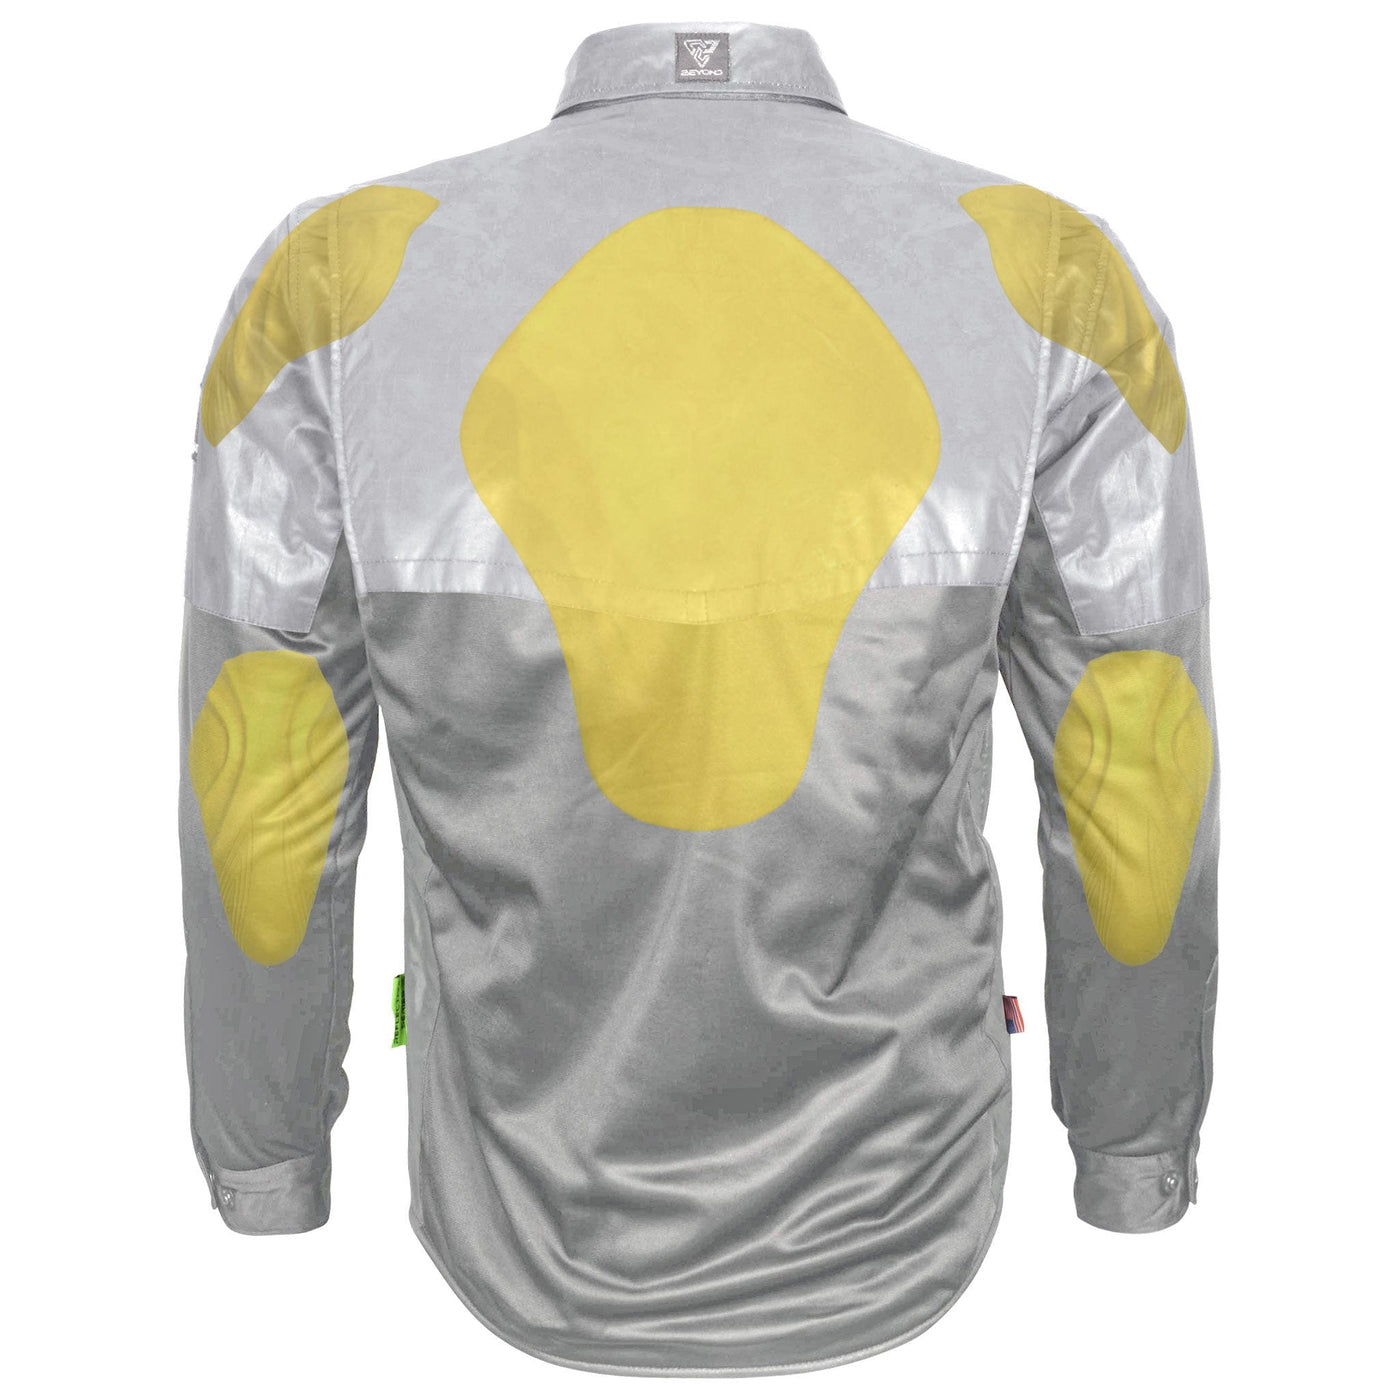 Ultra Reflective Shirt "Twilight Titanium"  with Pads - Gray